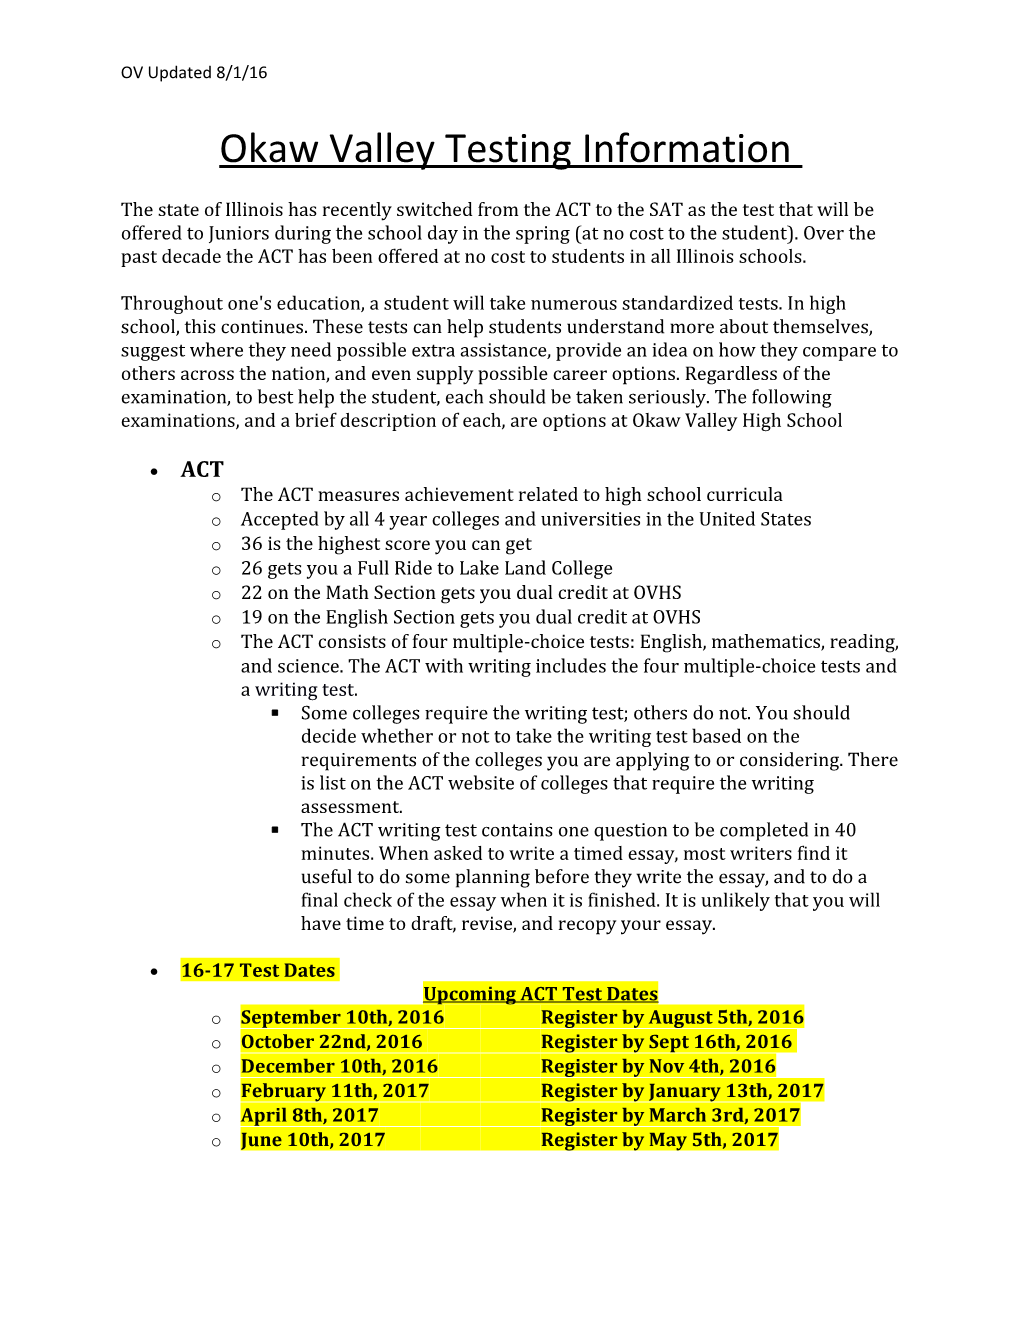 Okaw Valley Testing Information